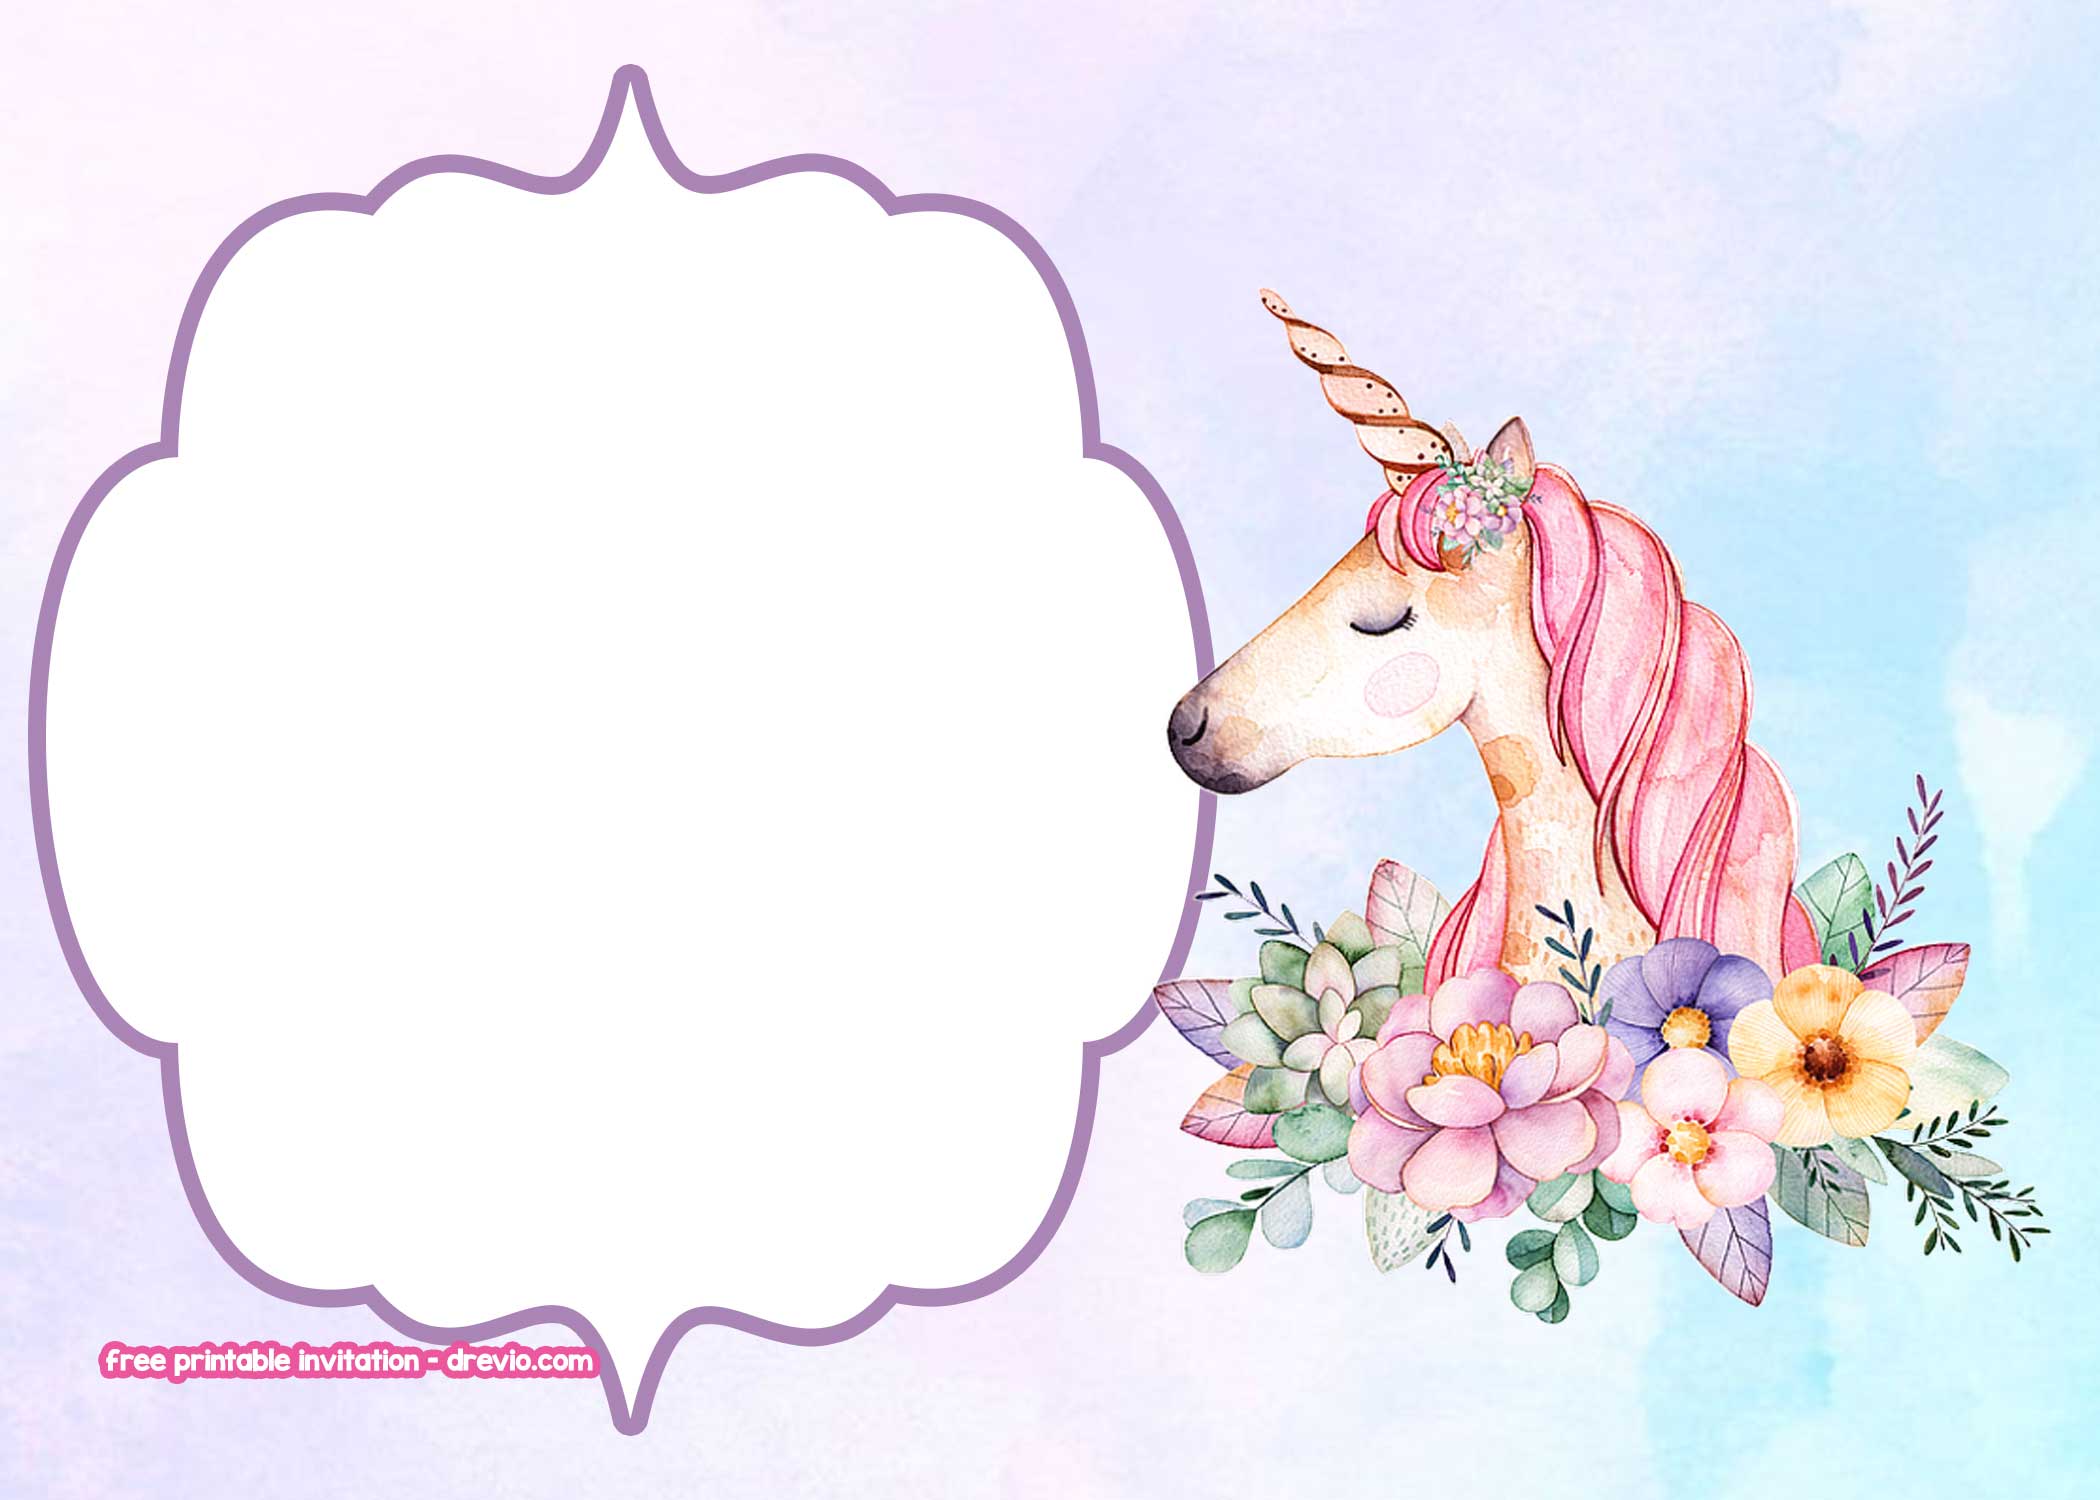 FREE Unicorn Invitation Templates Pastel and Flower Background